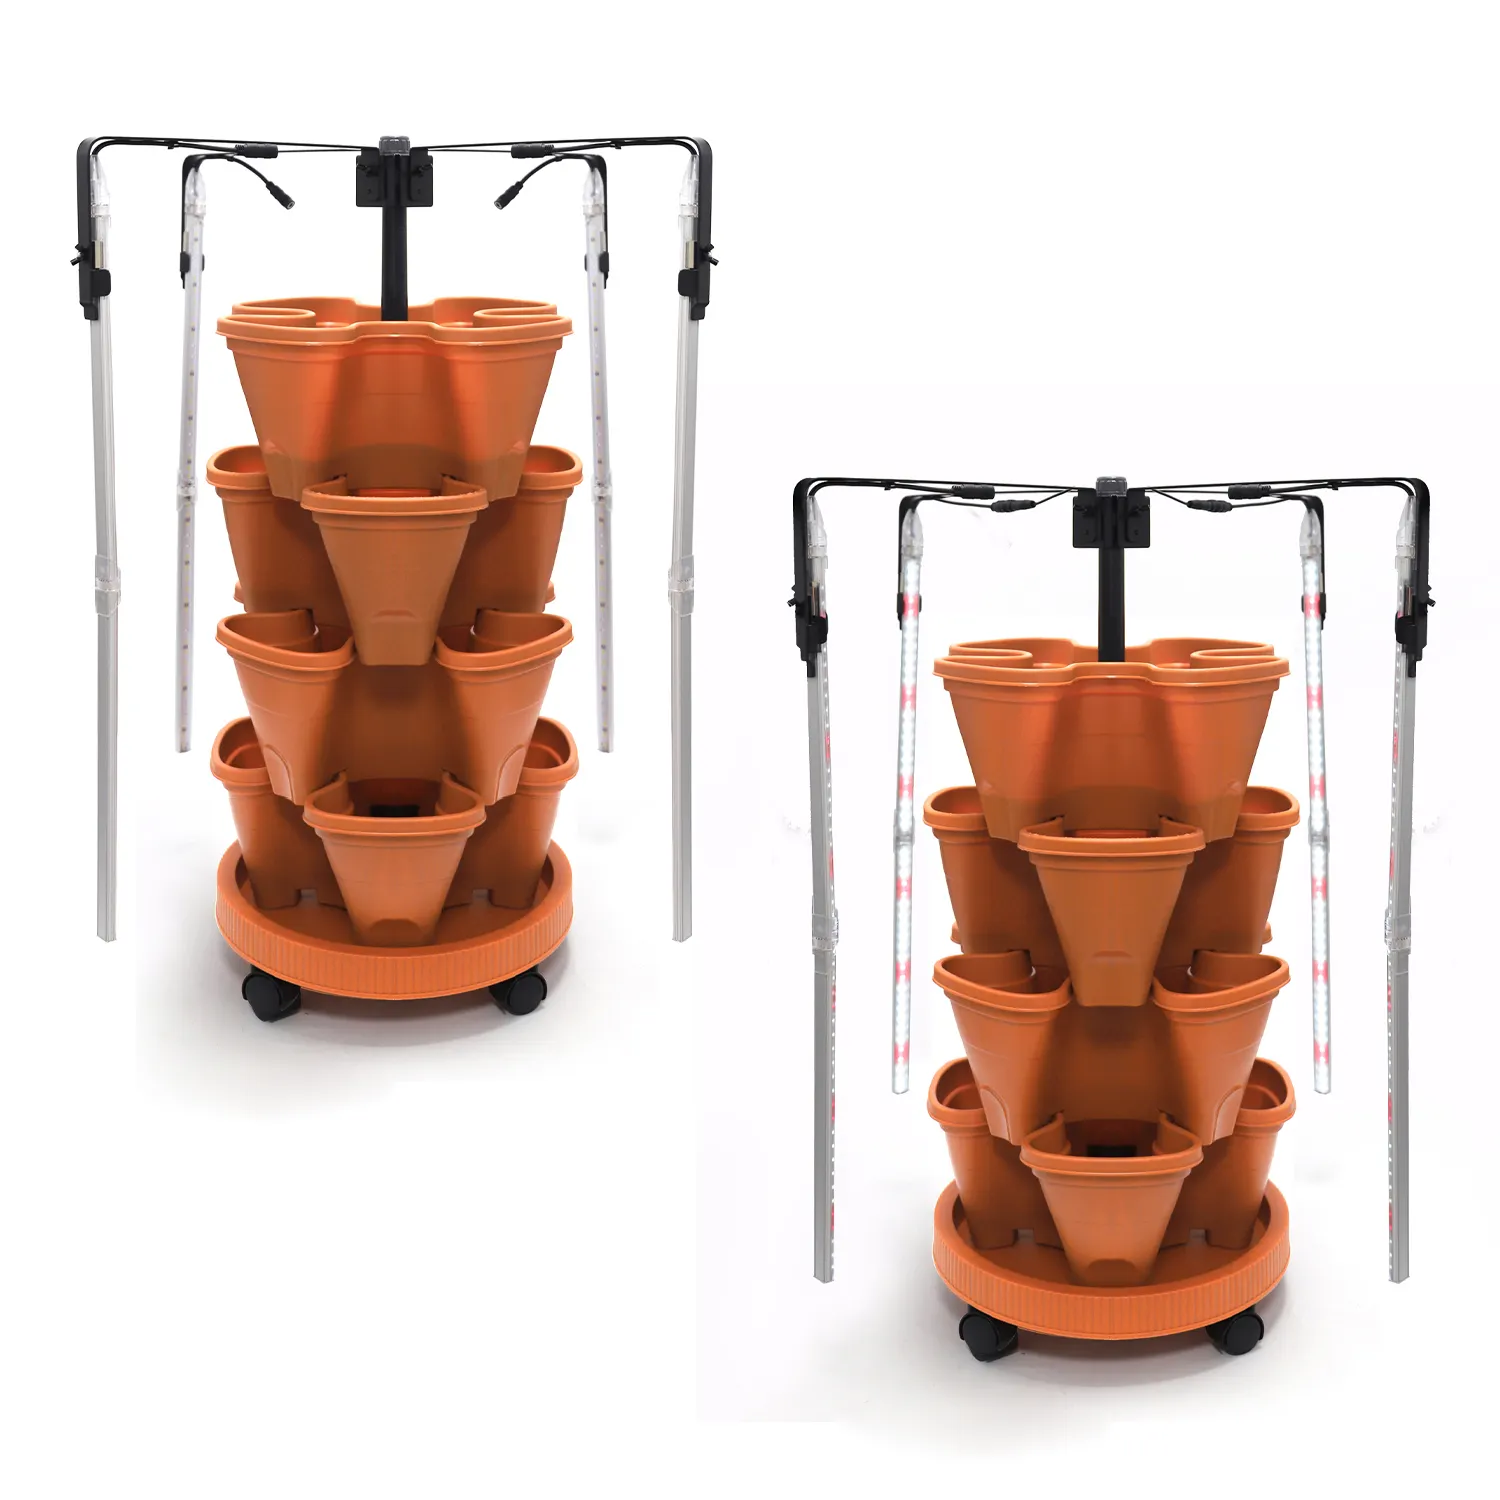 EDKFARM-Tira de cultivo vertical, lámpara LED de 4 niveles, macetas apilables, macetas verticales de jardín, sistema de autorriego para verduras